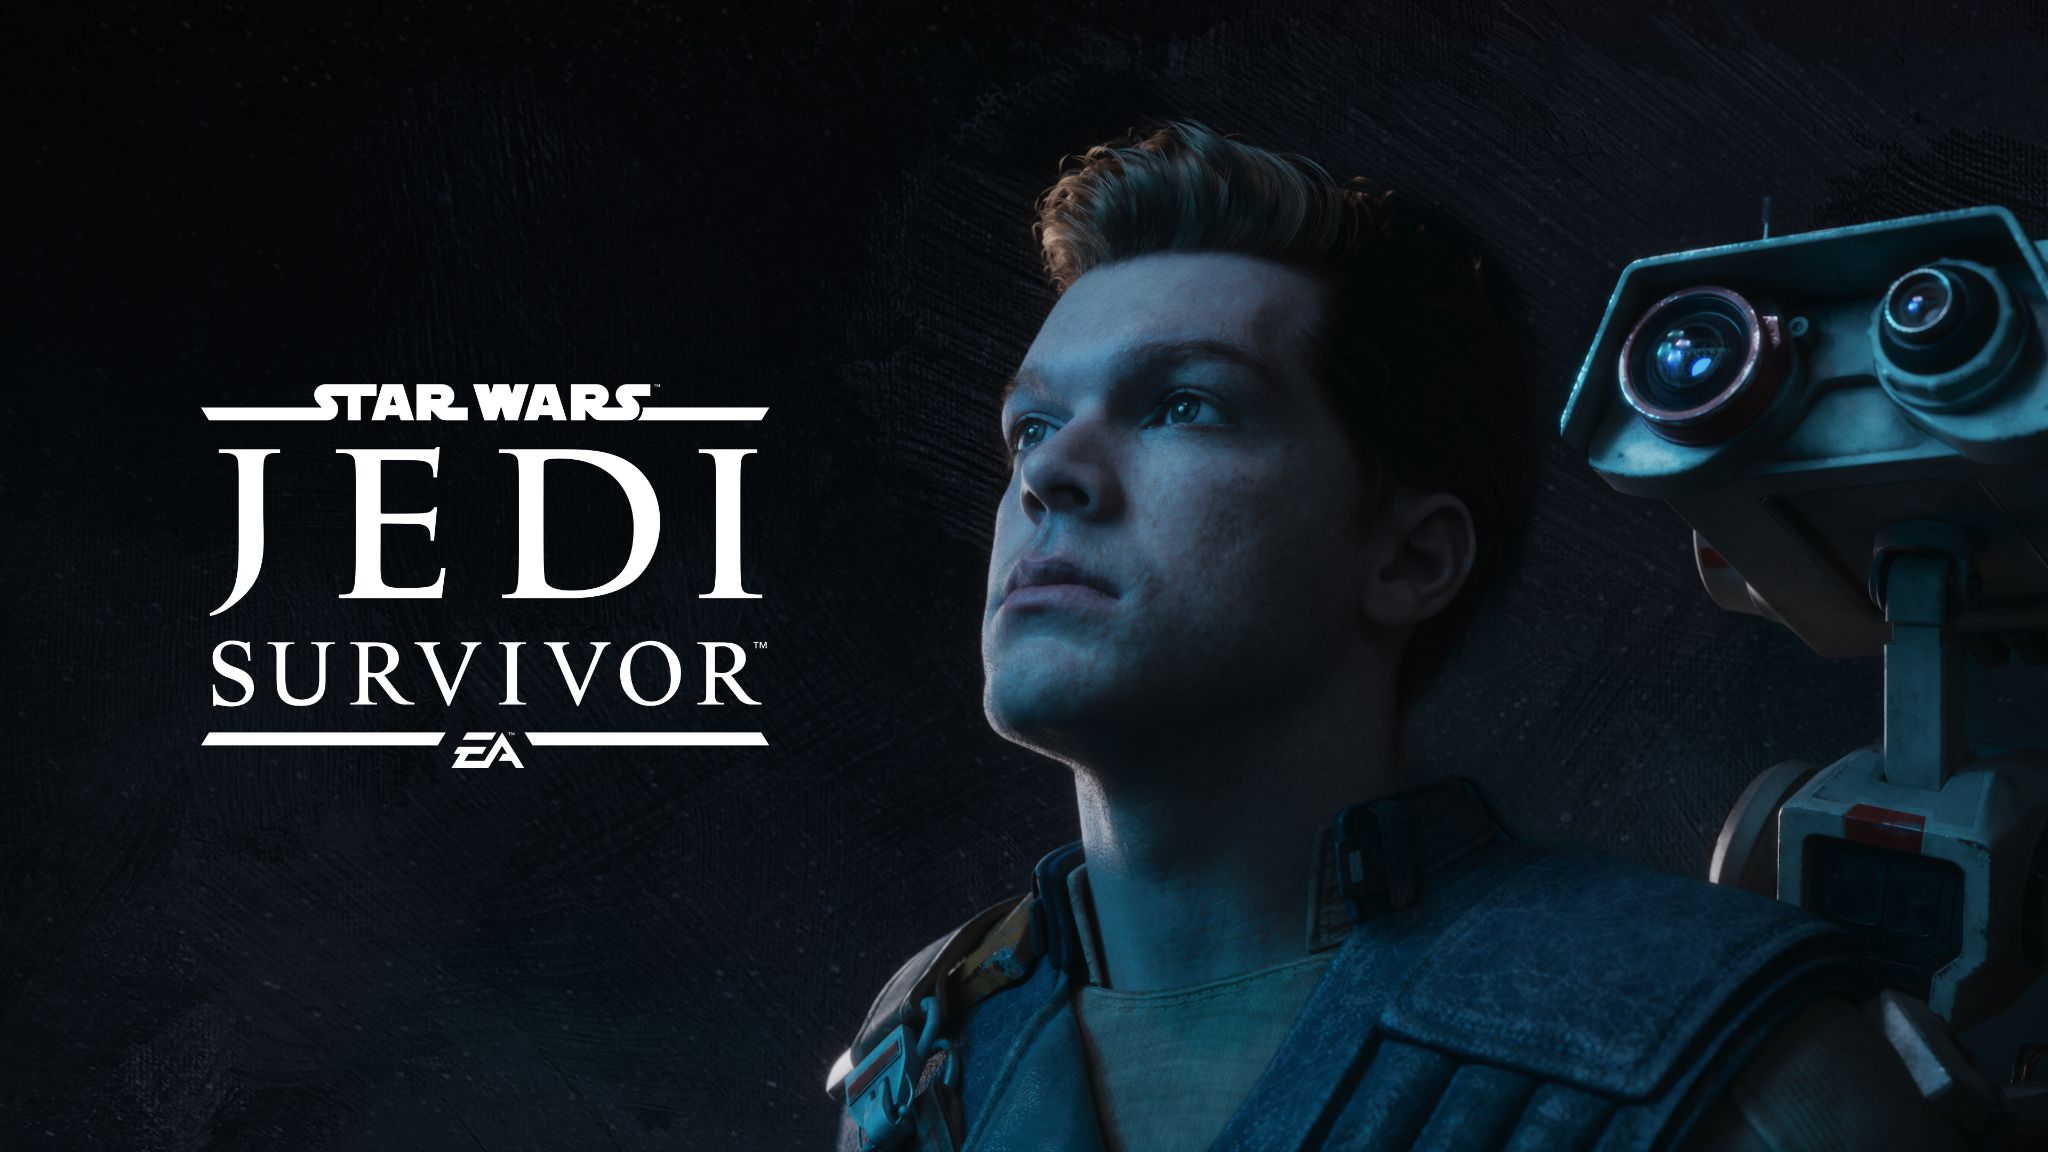 EA | Star Wars Jedi: Survivor é anunciado oficialmente na Star Wars Celebration